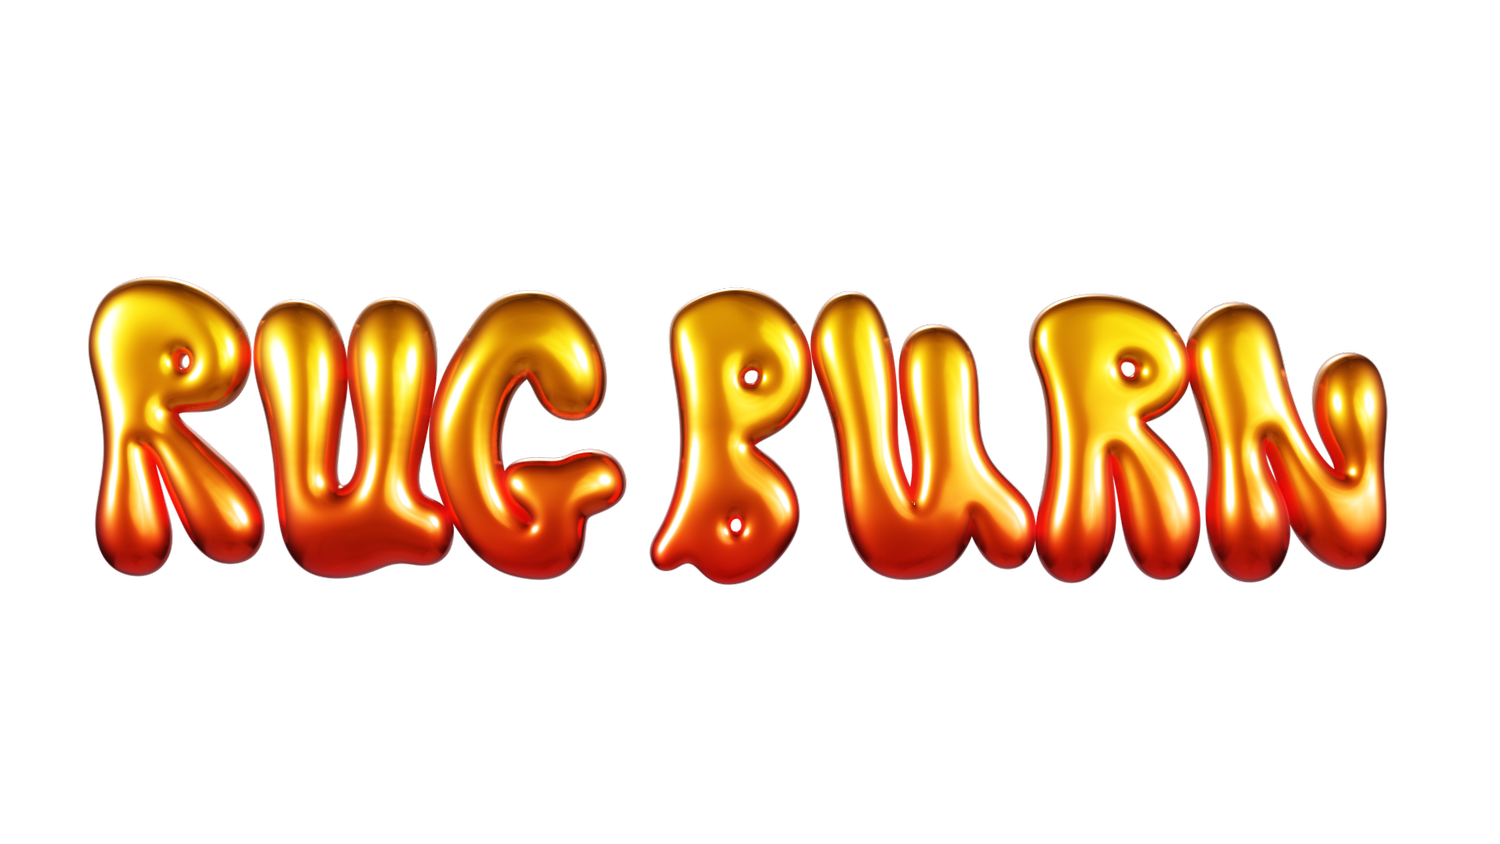 Rug Burn